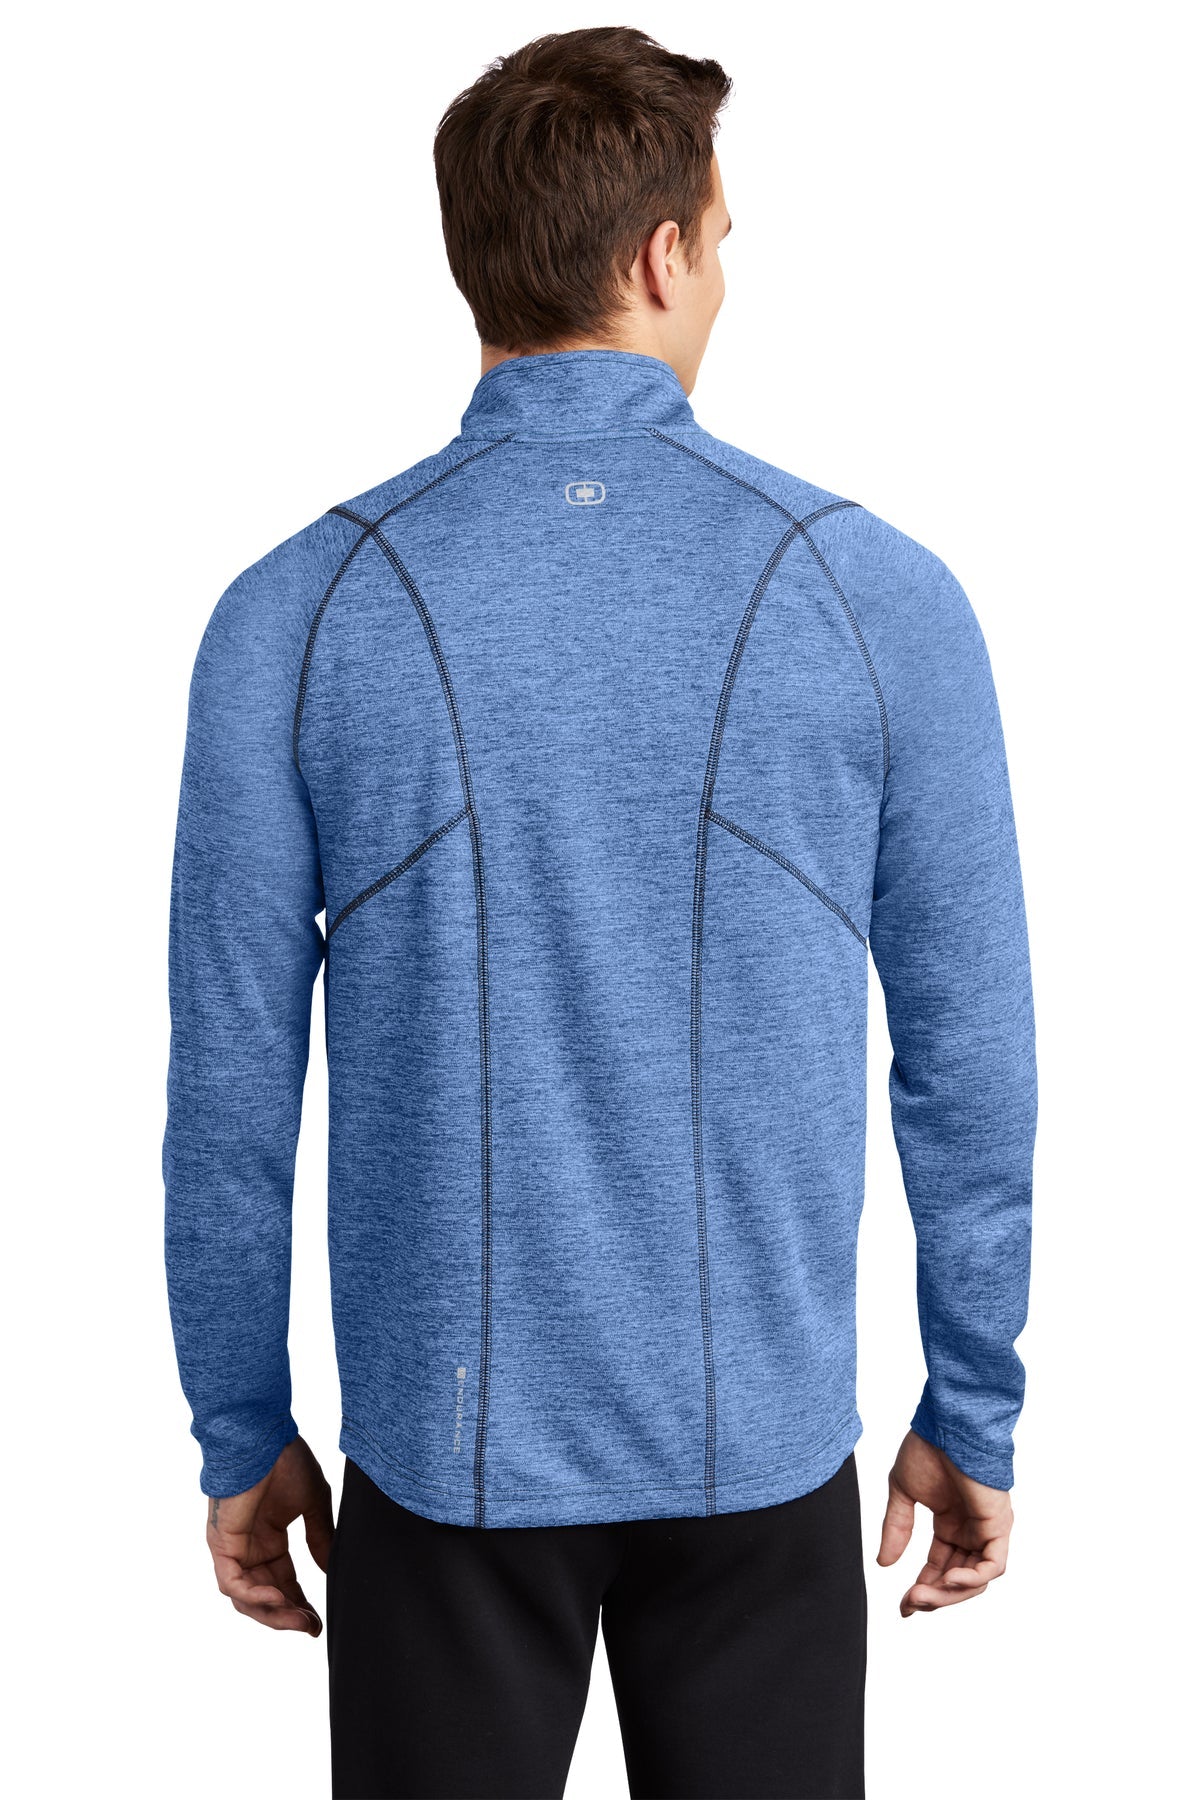 ogio endurance_oe500 _electric blue_company_logo_sweatshirts